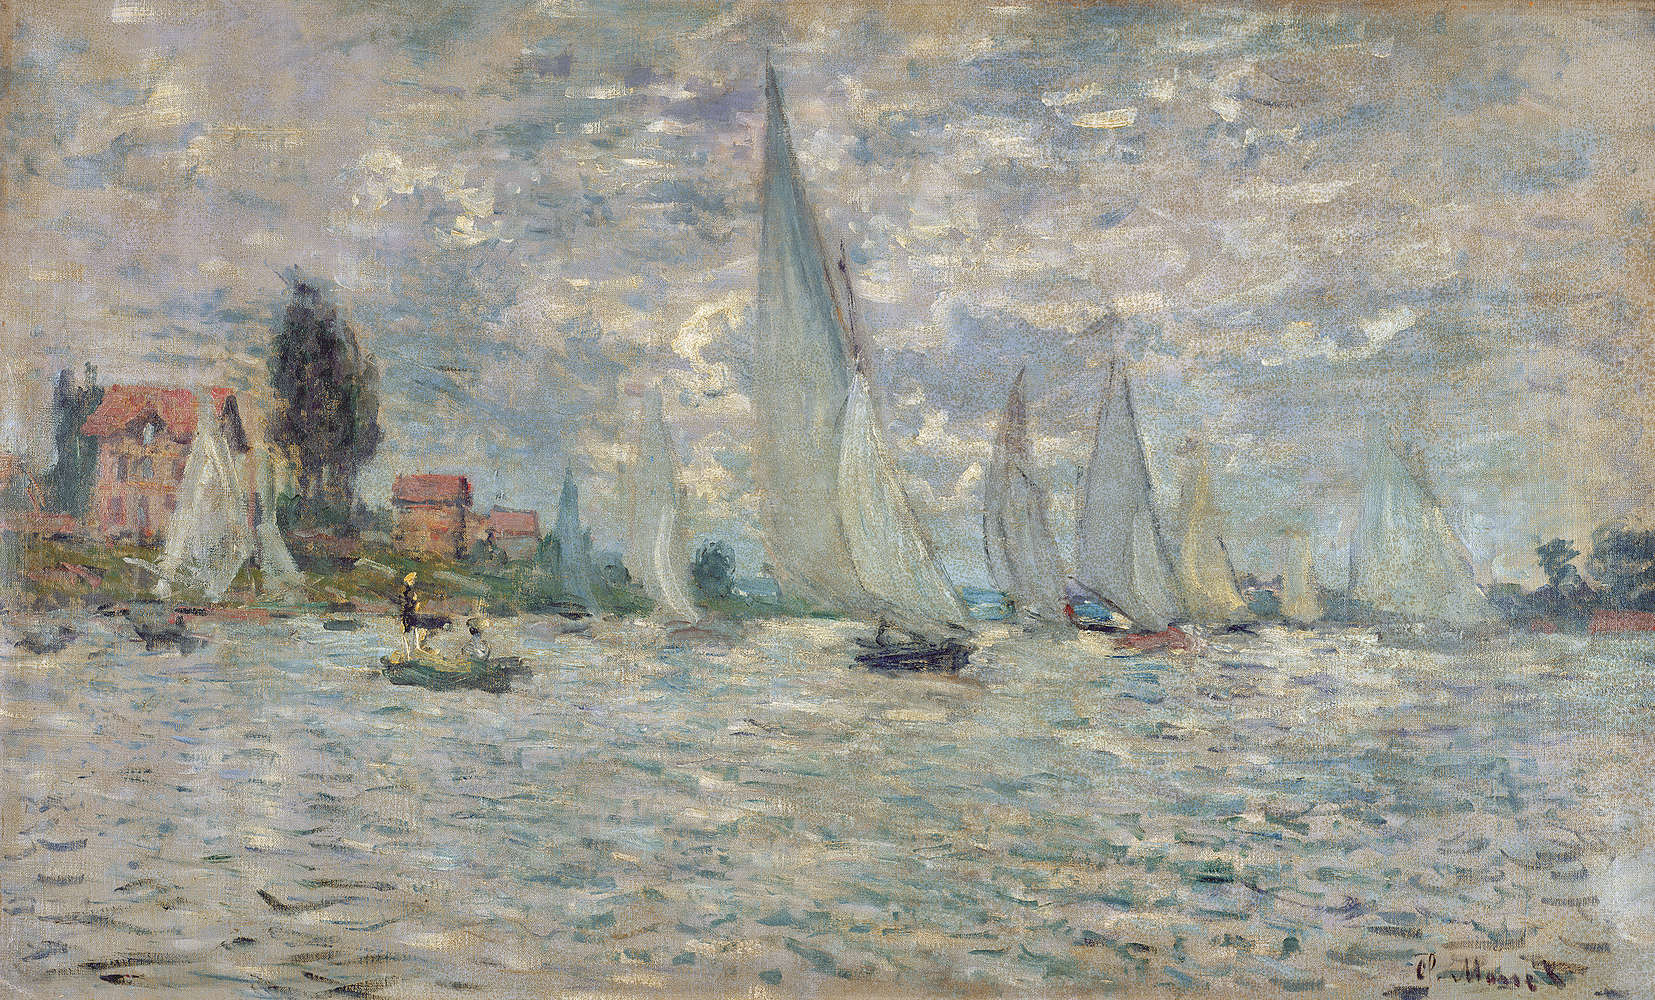             Mural "Los barcos o la regata de Argenteuil" de Claude Monet
        